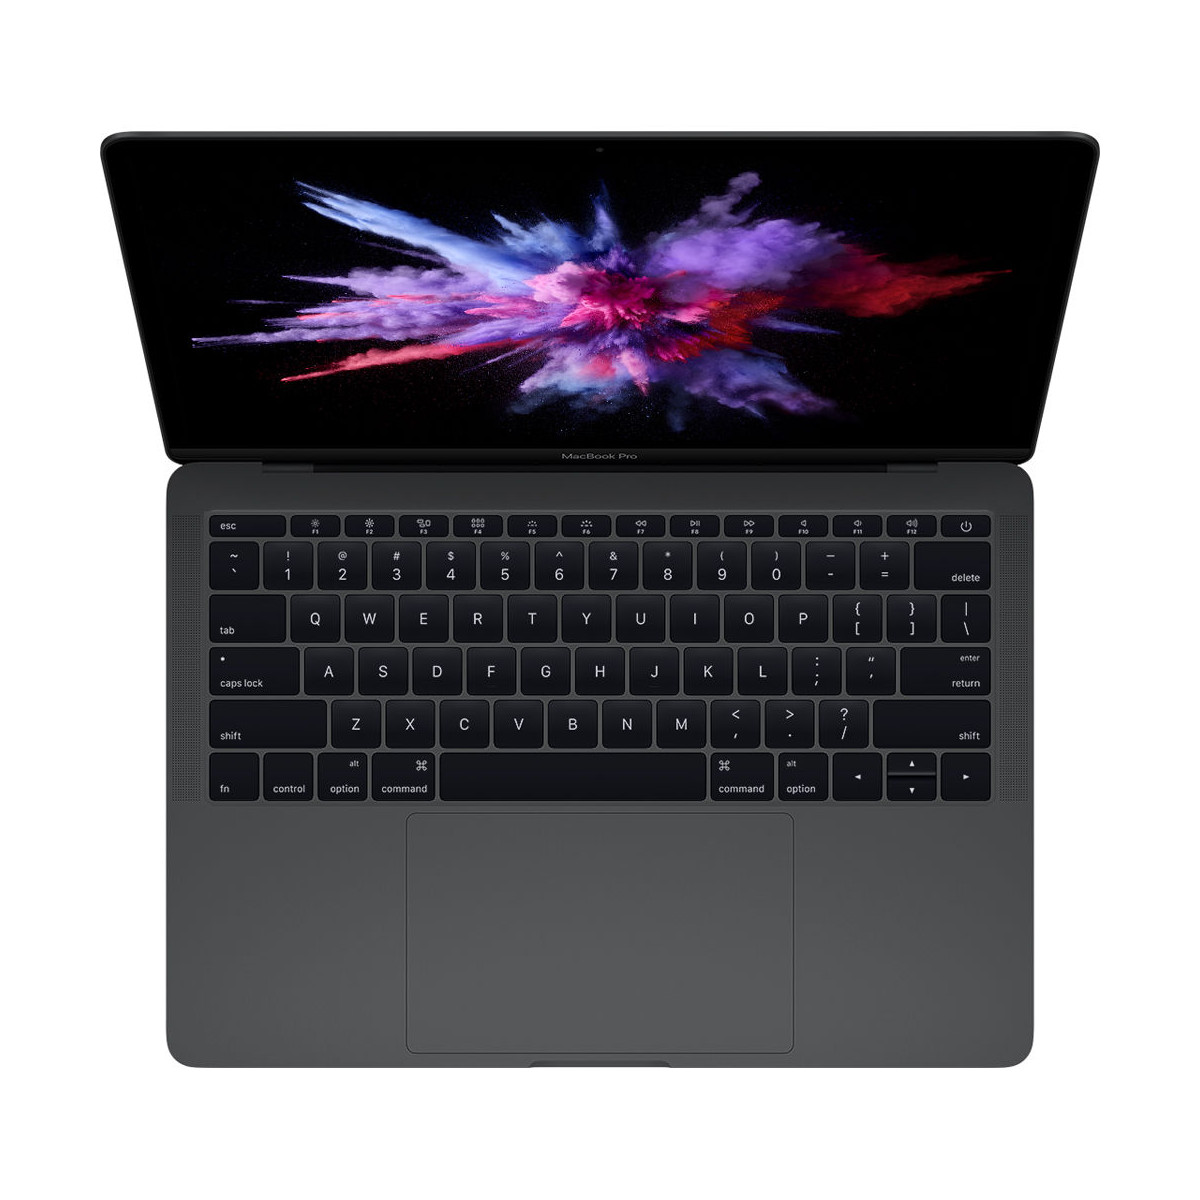 MacBook Pro 13 2017 price in Kenya